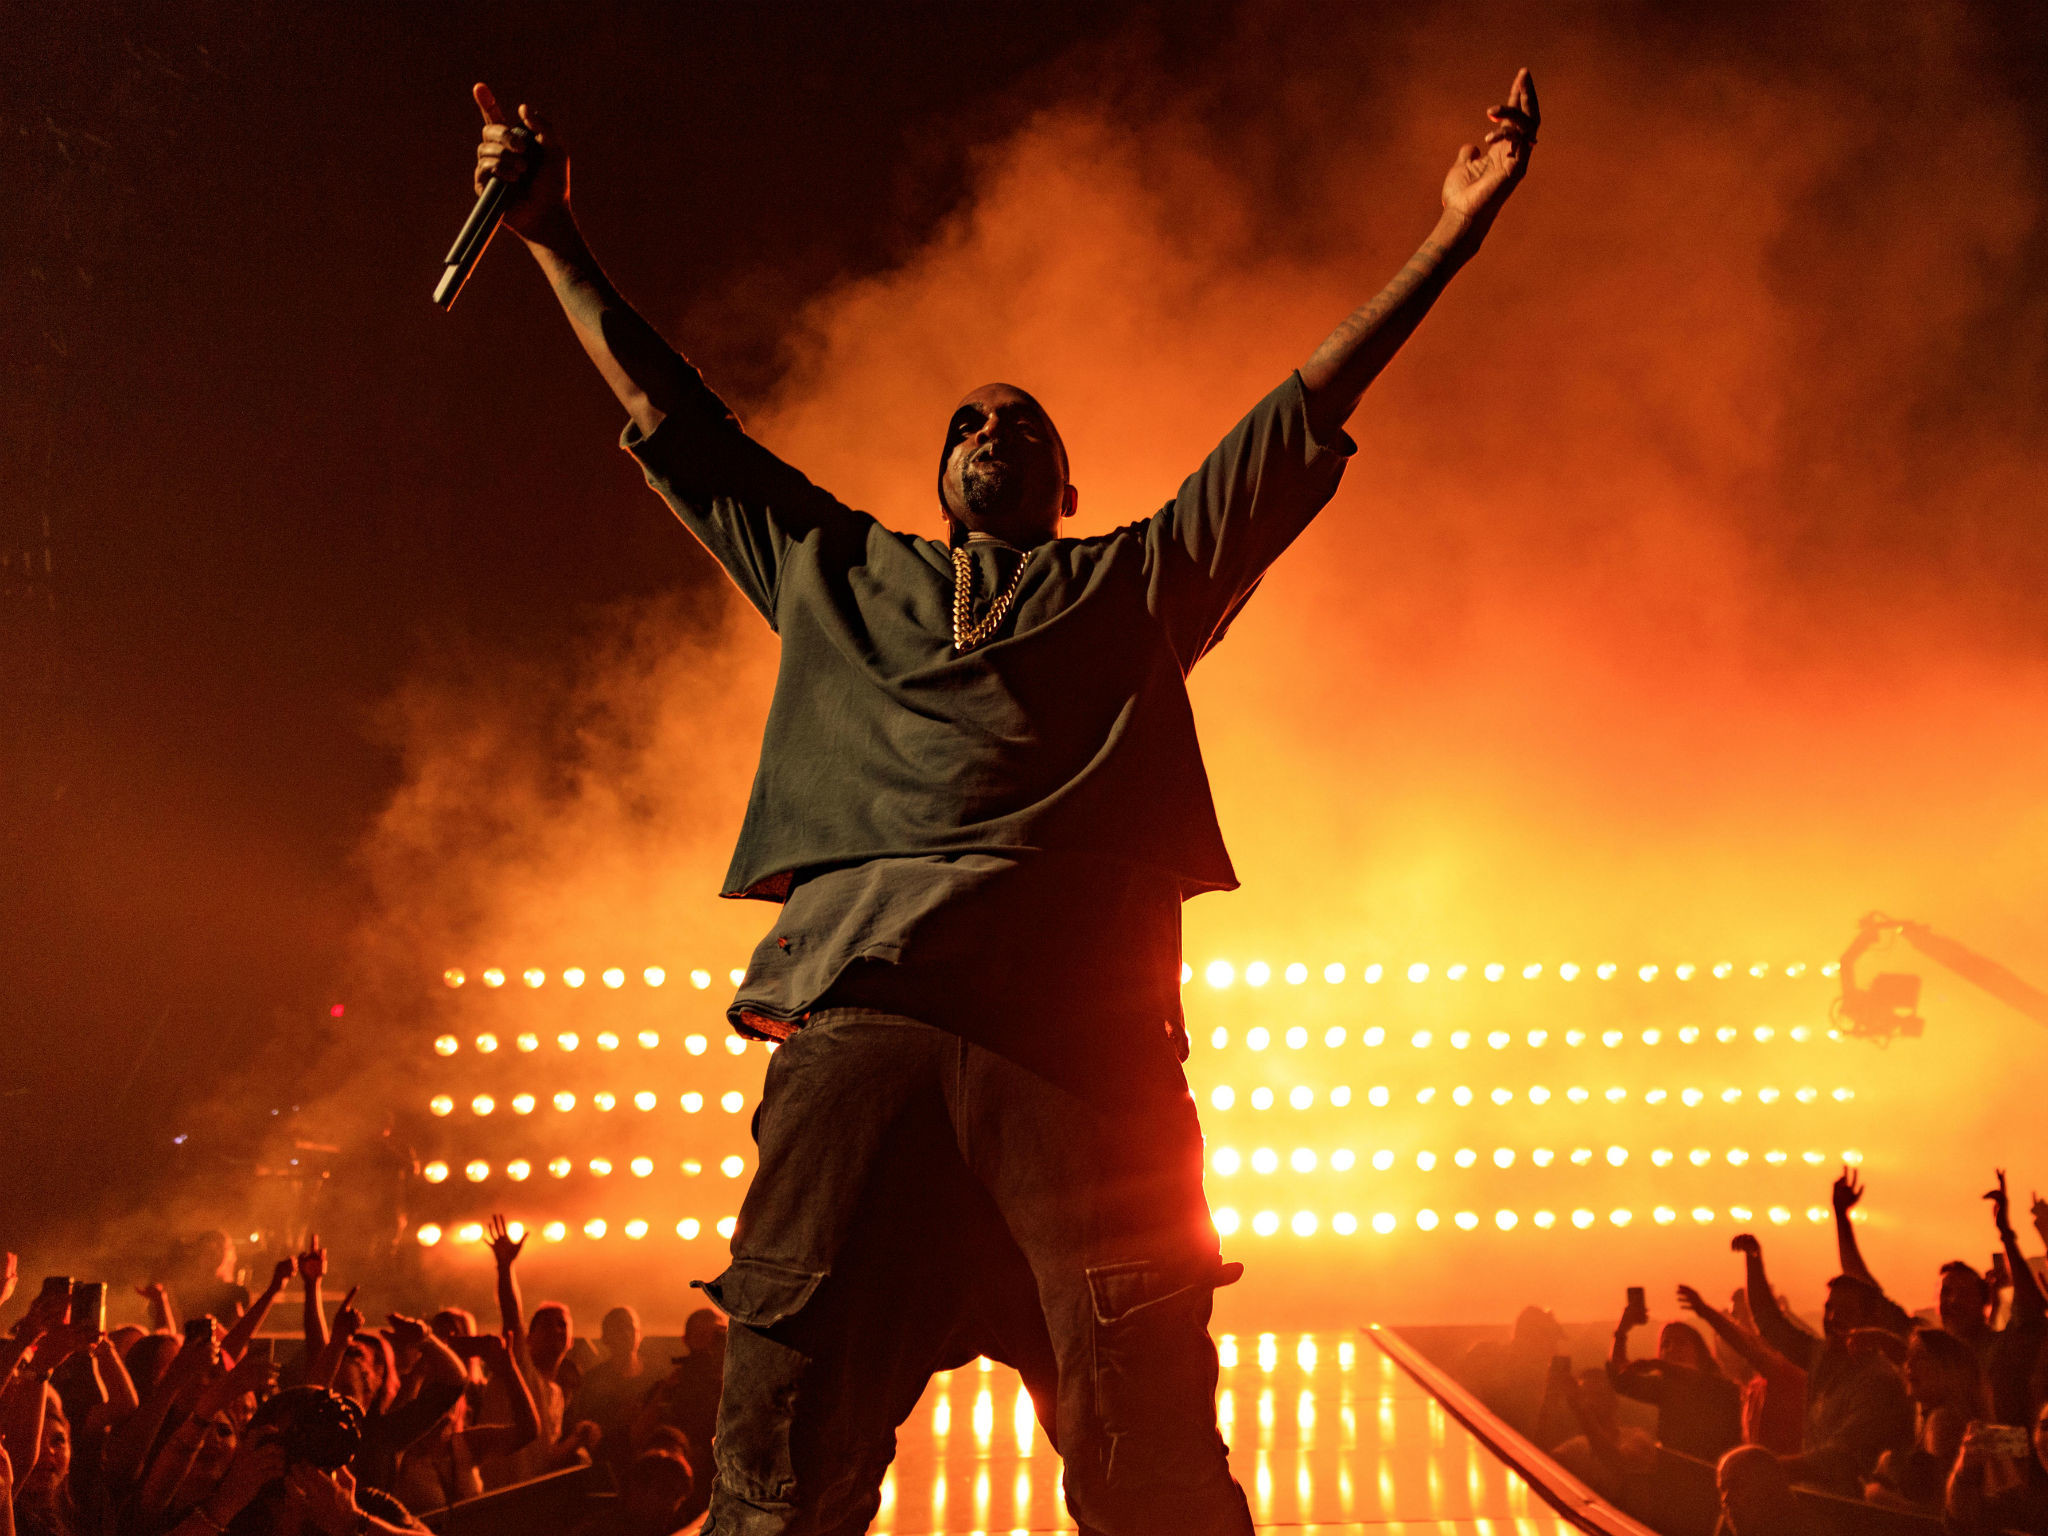 Kanye West Wallpaper HD